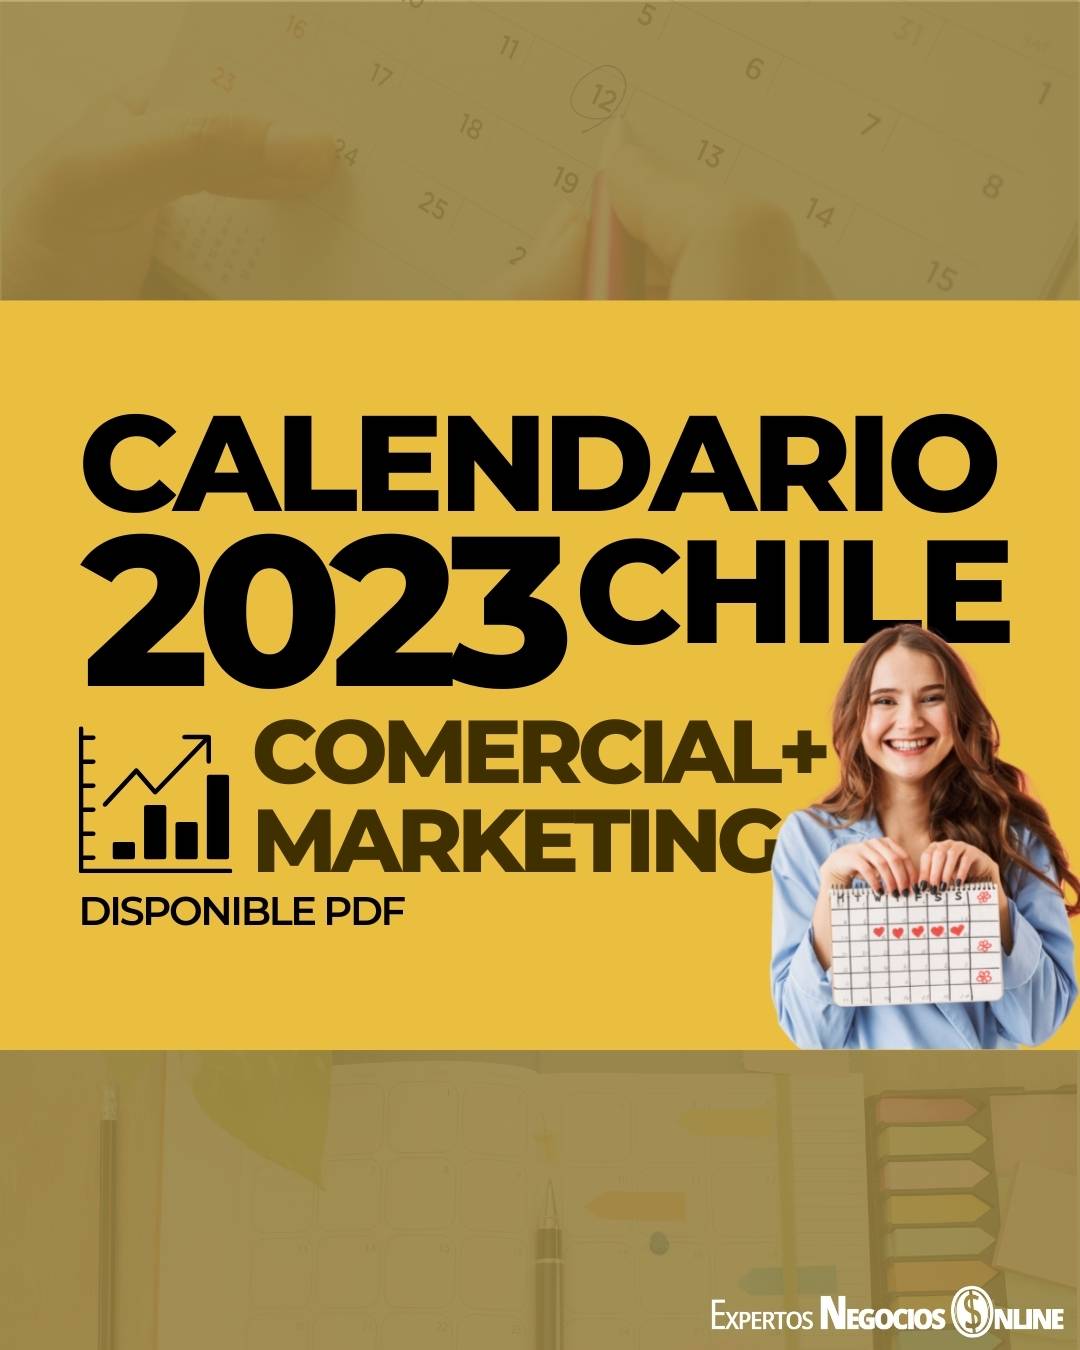 Calendario Chile 2023 para Marketing, Comercial & eCommerce